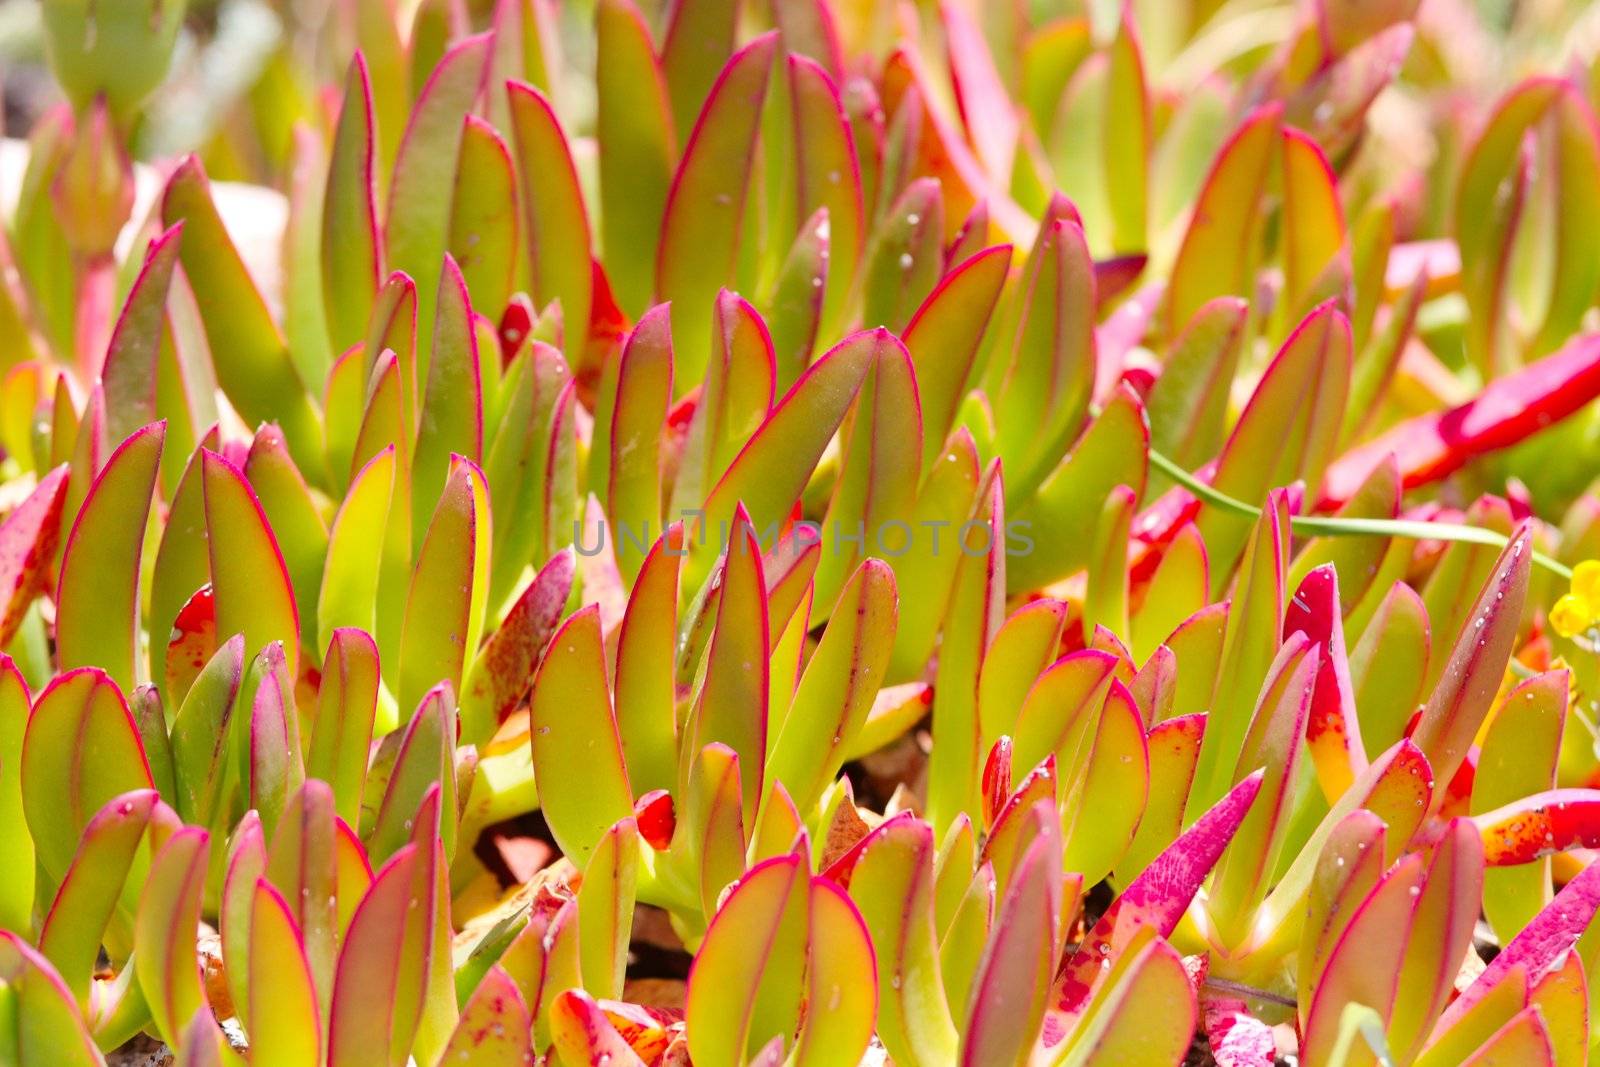  Close-up of fresh green plants